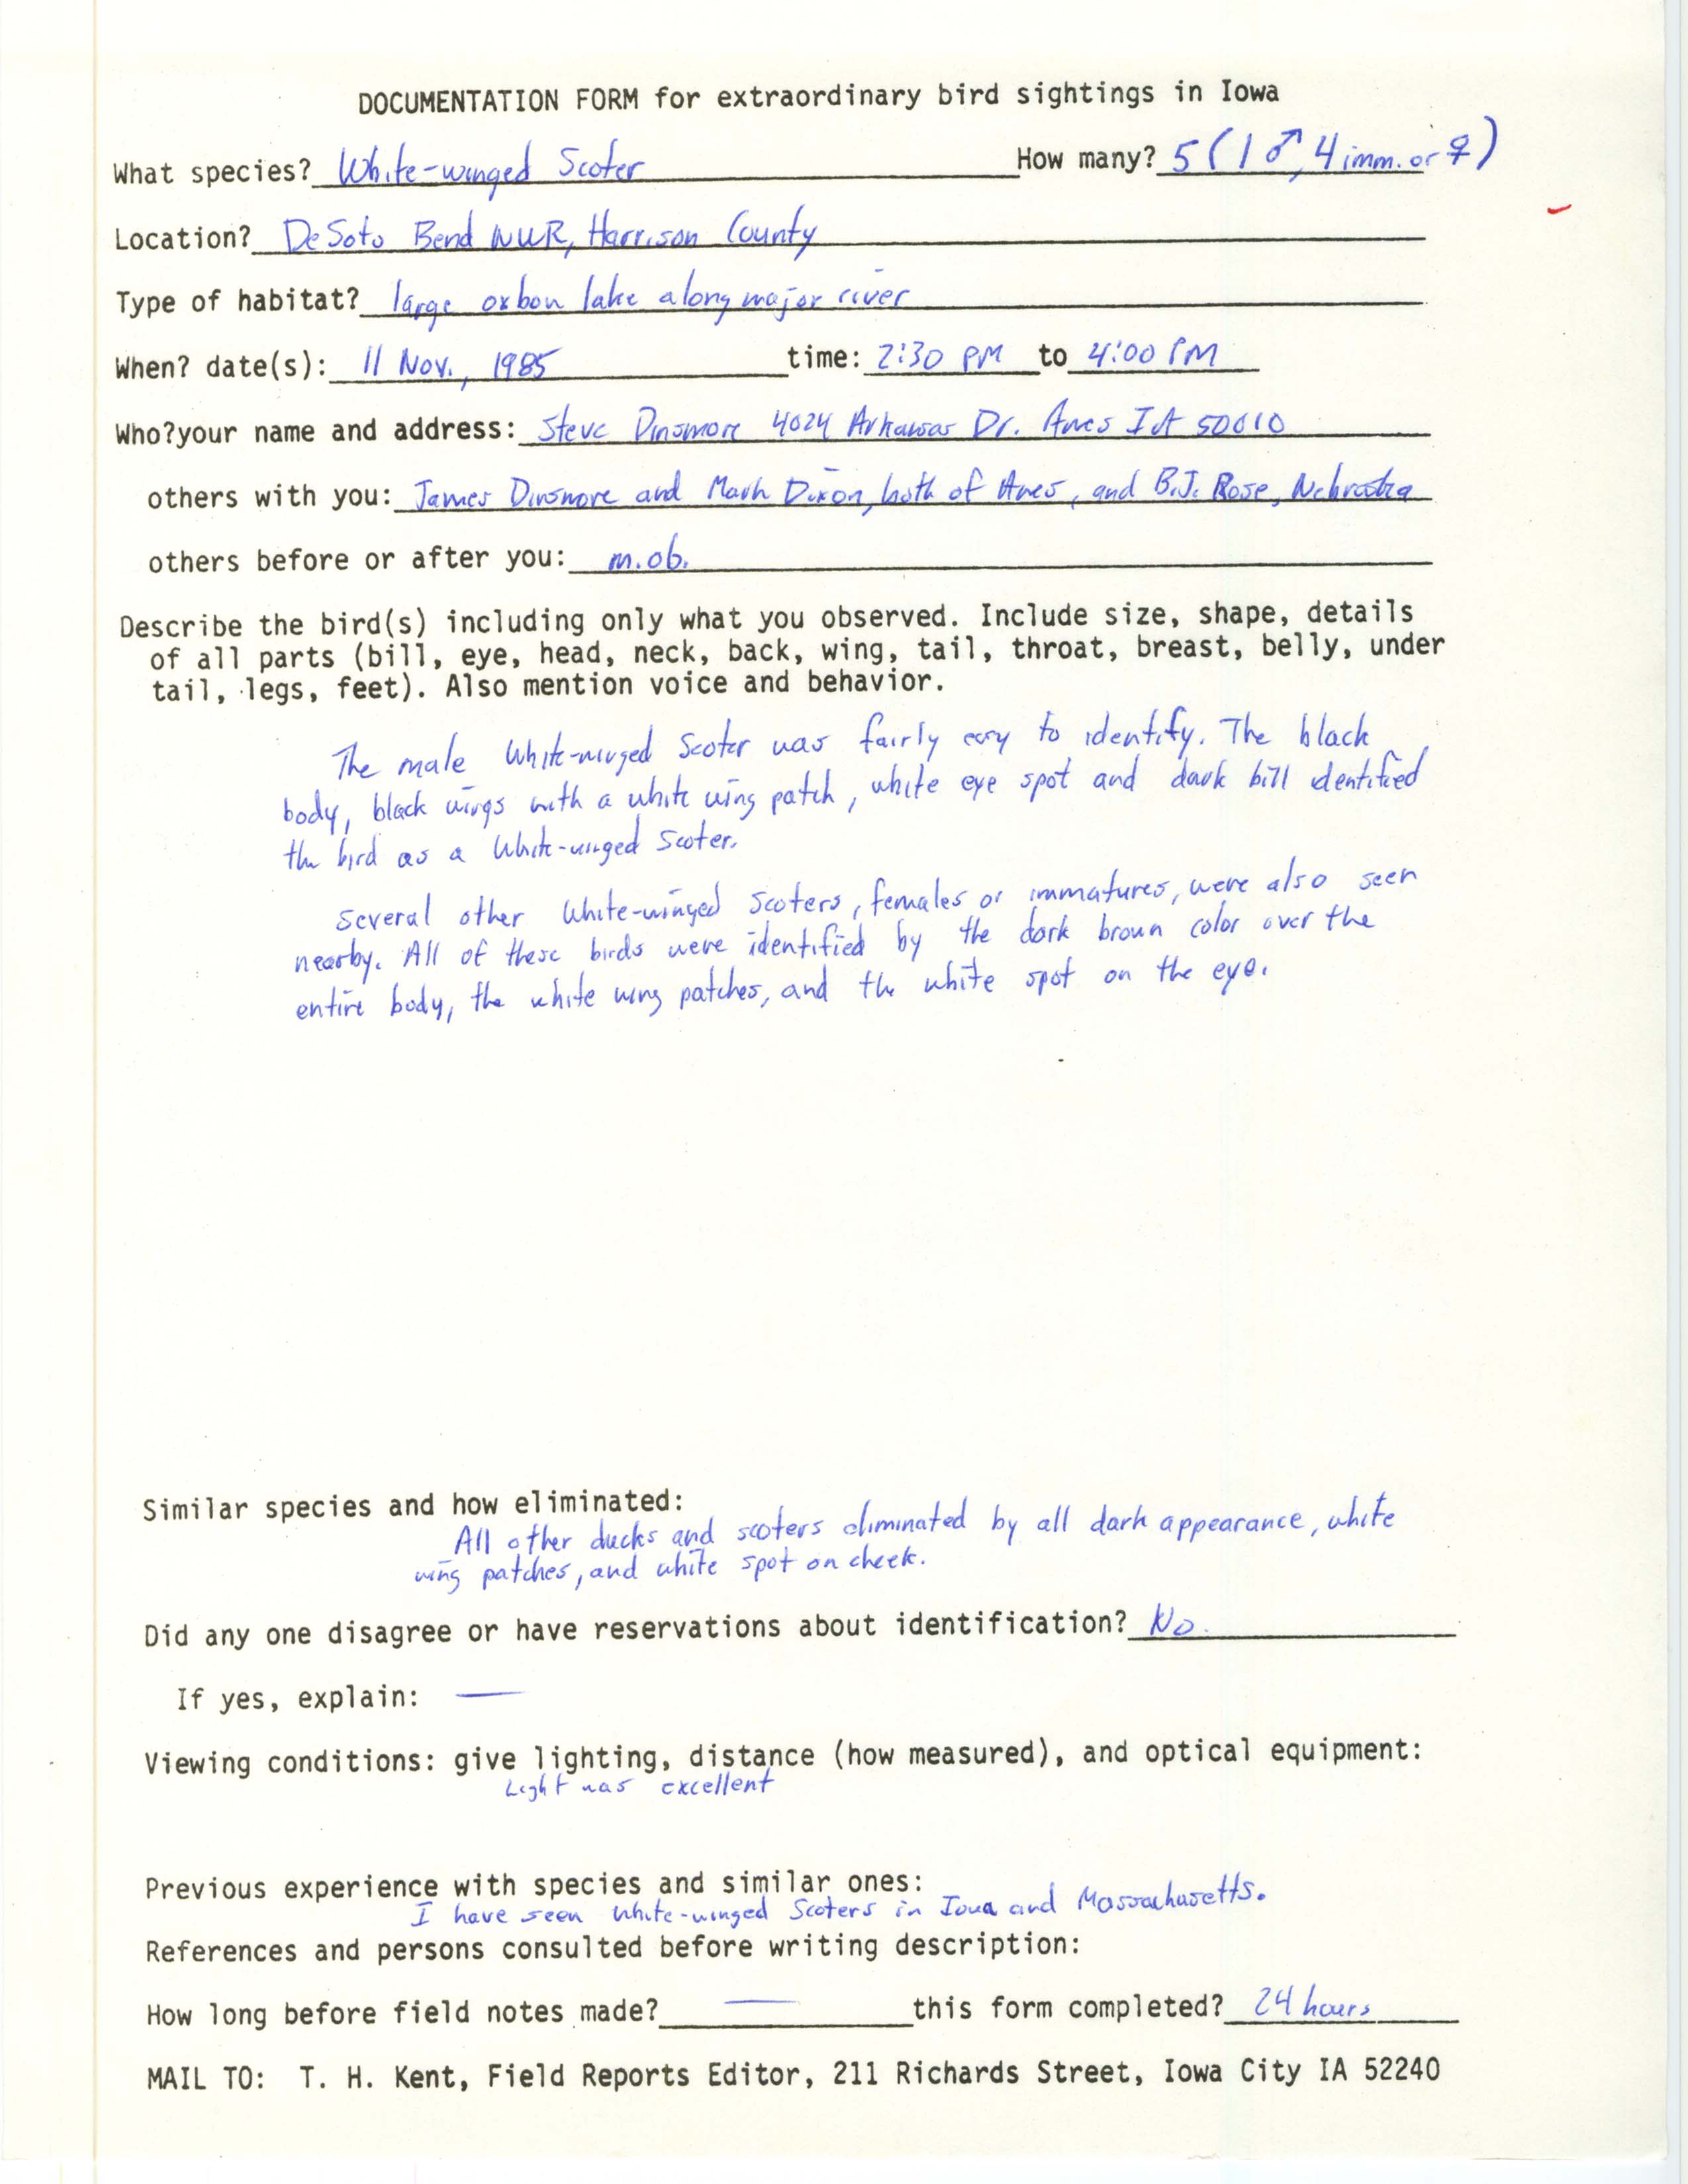 Rare bird documentation form for White-winged Scoter at DeSoto Bend National Wildlife Refuge in 1985